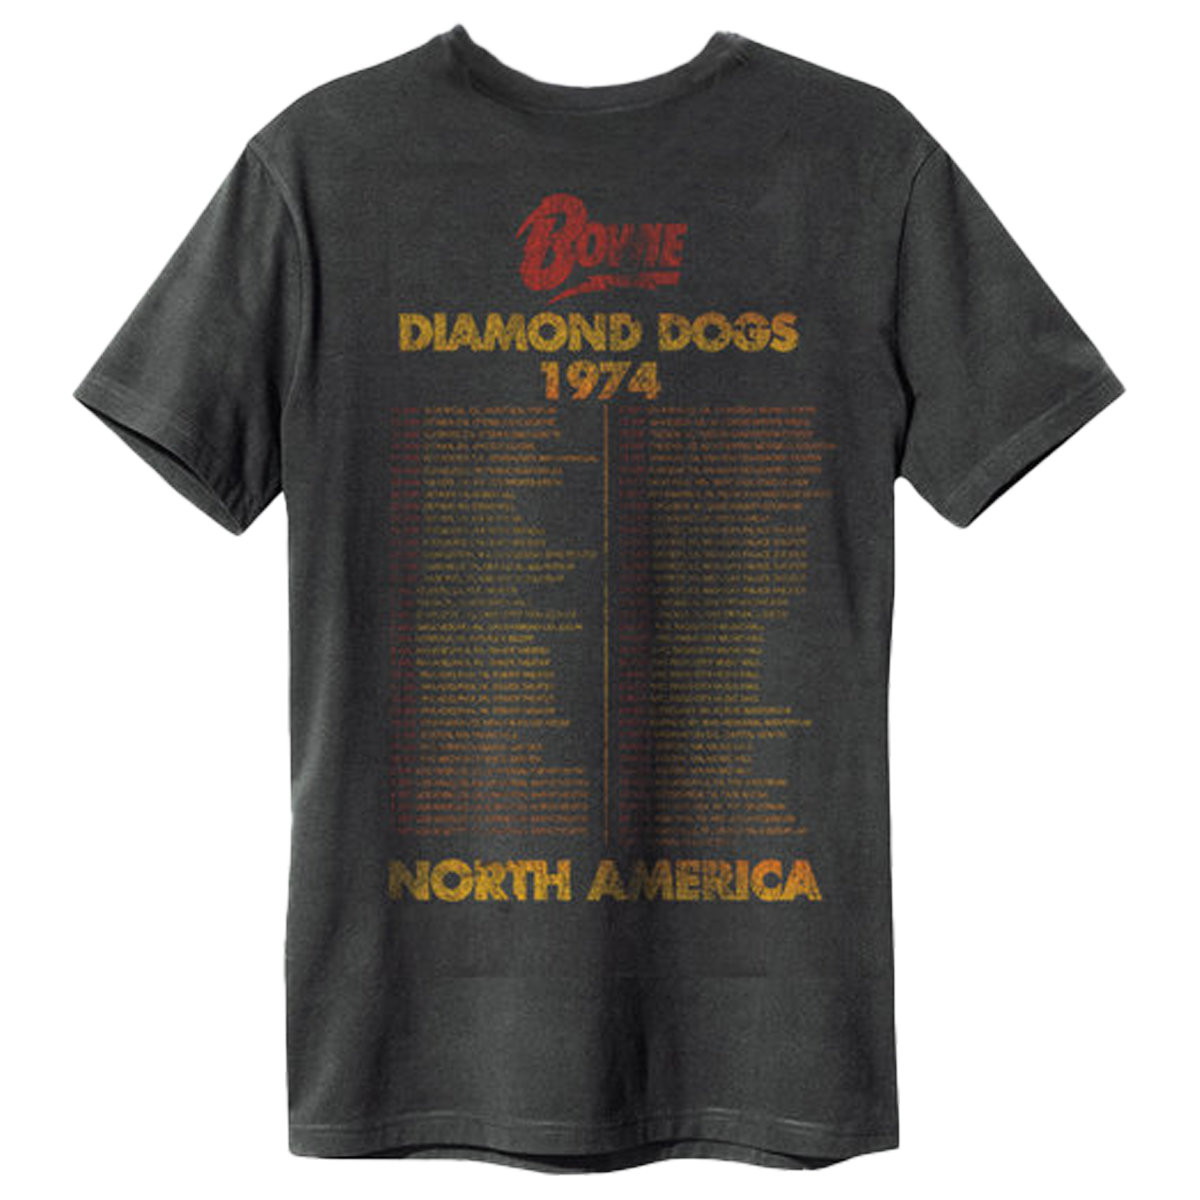 DAVID BOWIE DIAMOND DOGS TOUR 1974 NORTH AMERICA